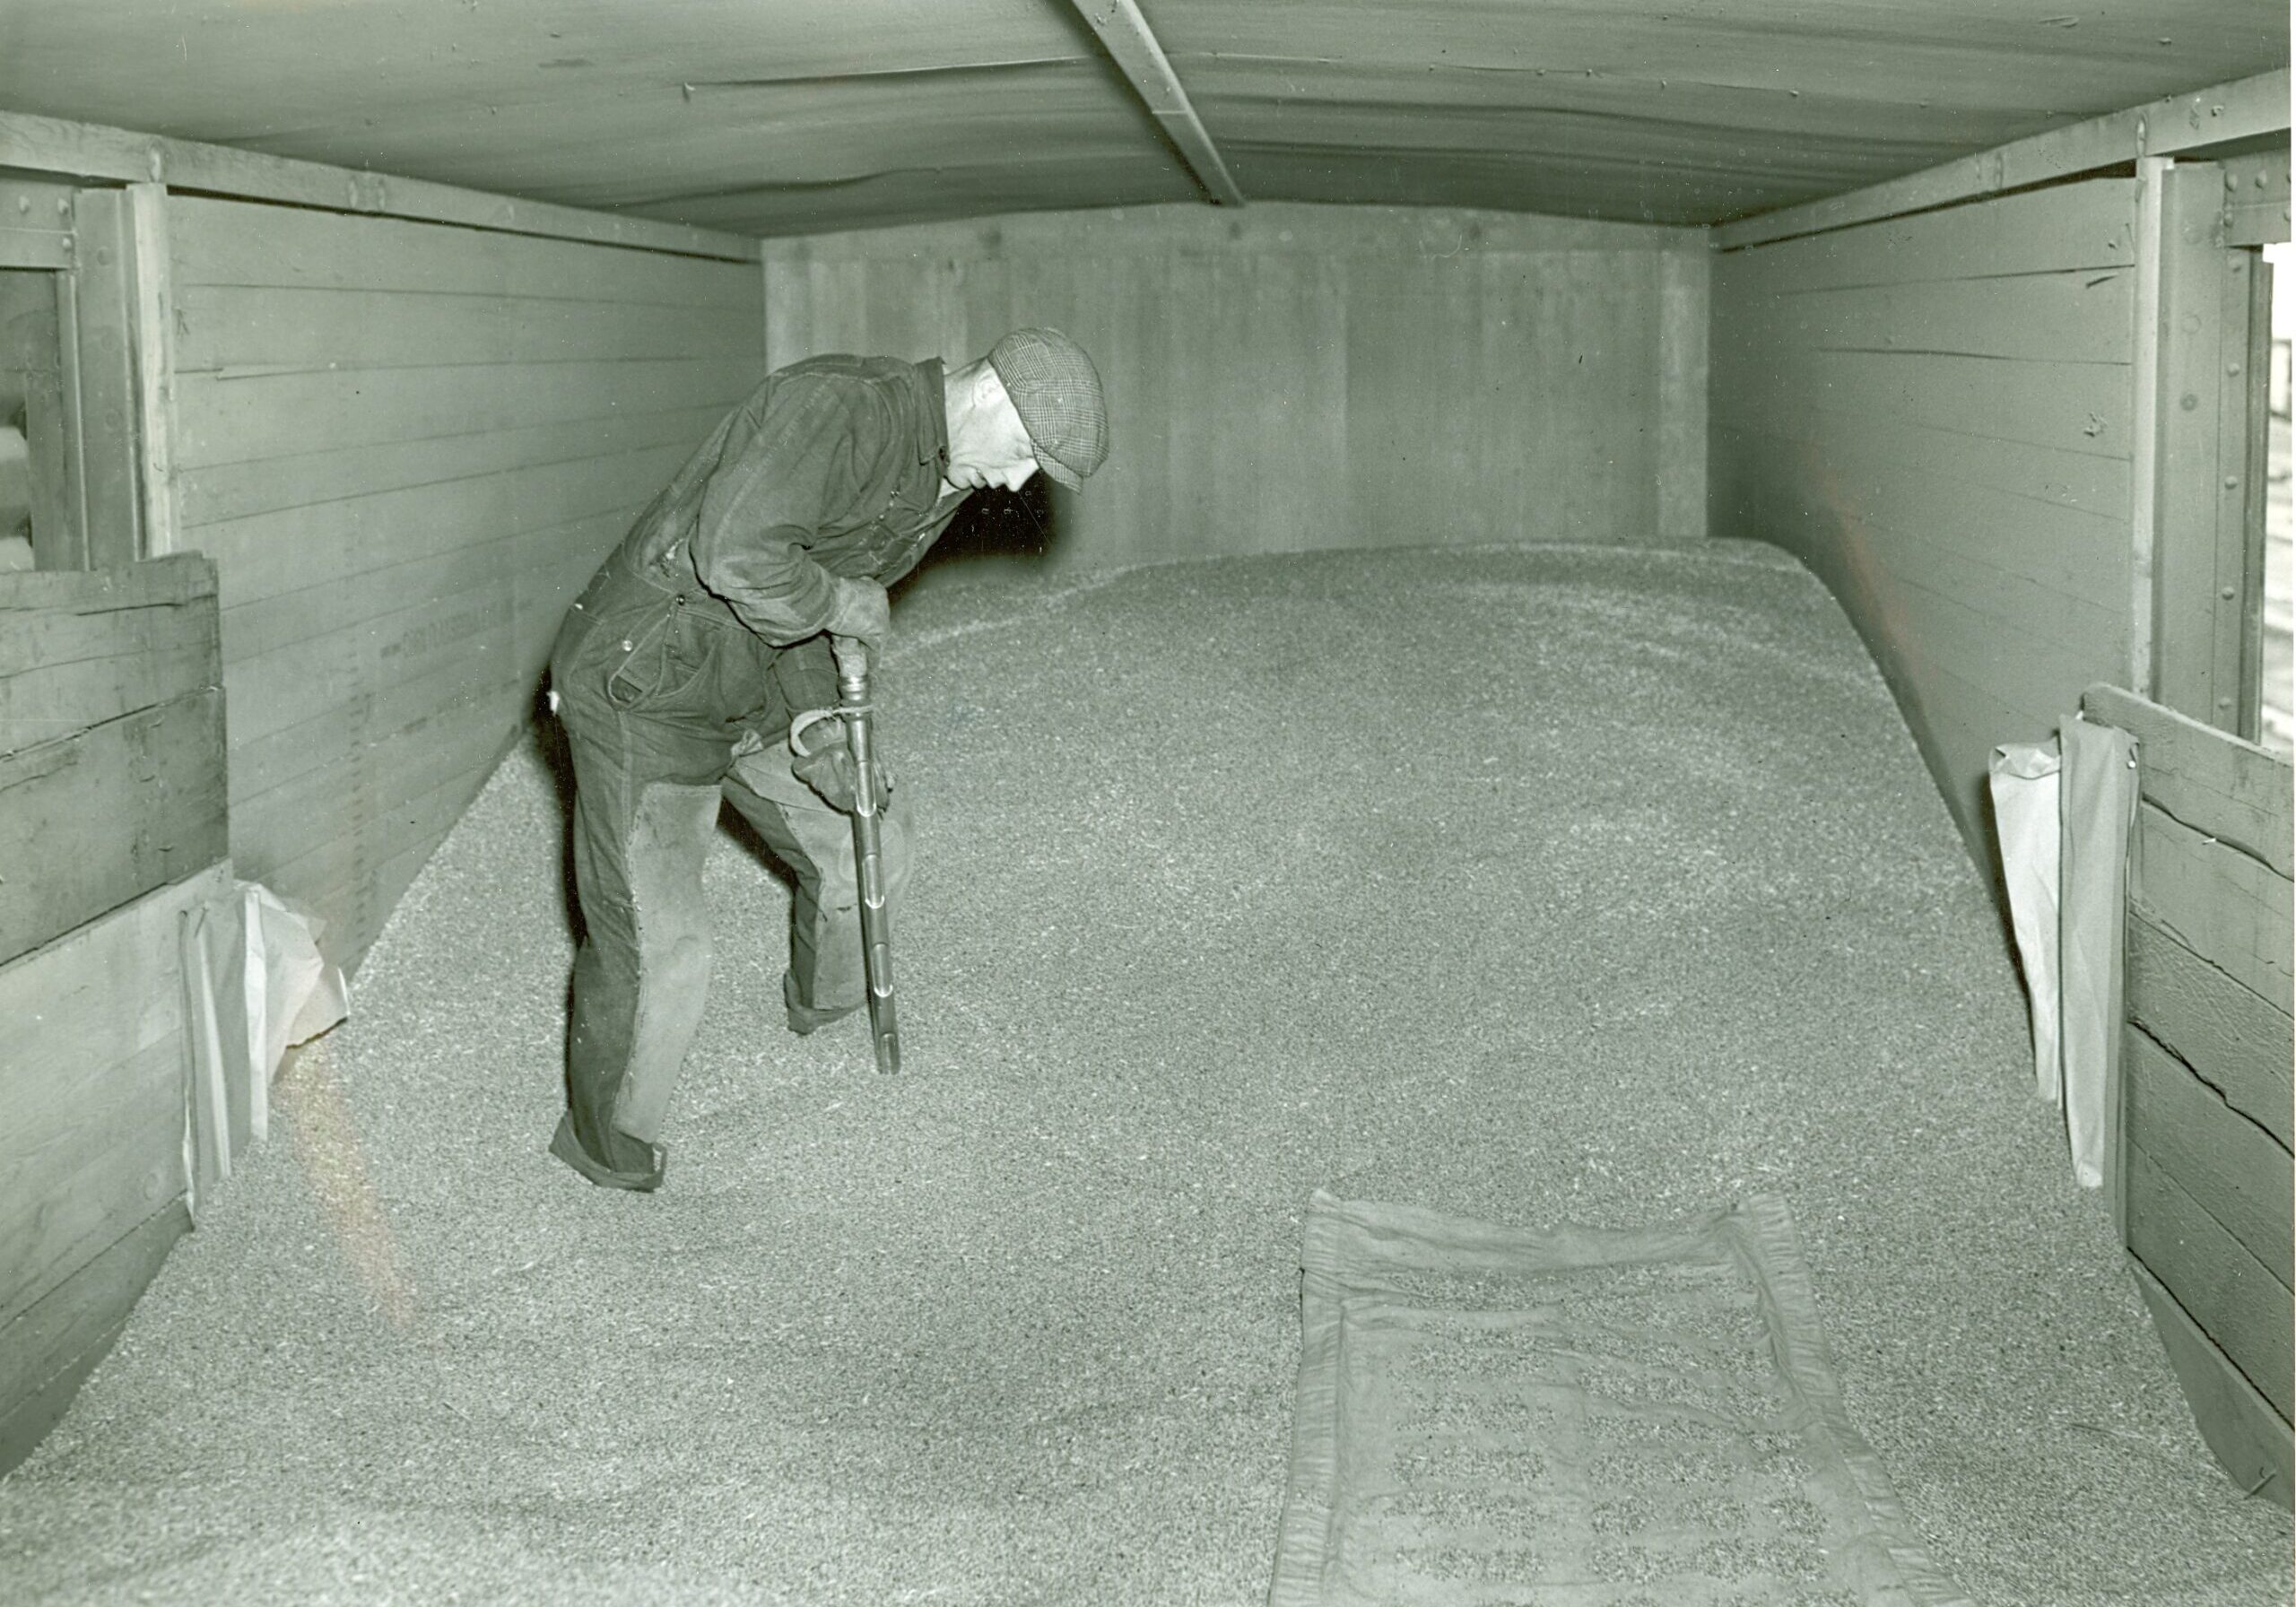 Canadian Grain Commission Grain Sampler Taking Sample inside Boxcar scan0027